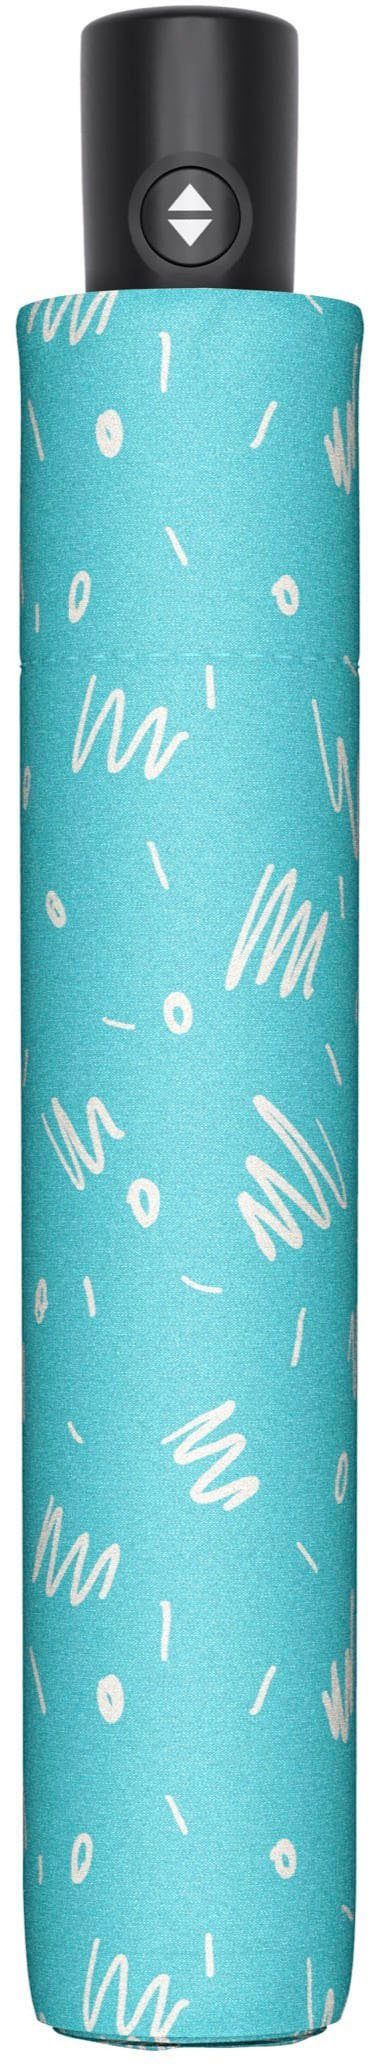 Taschenregenschirm zero Magic blue doppler® aqua Minimally,